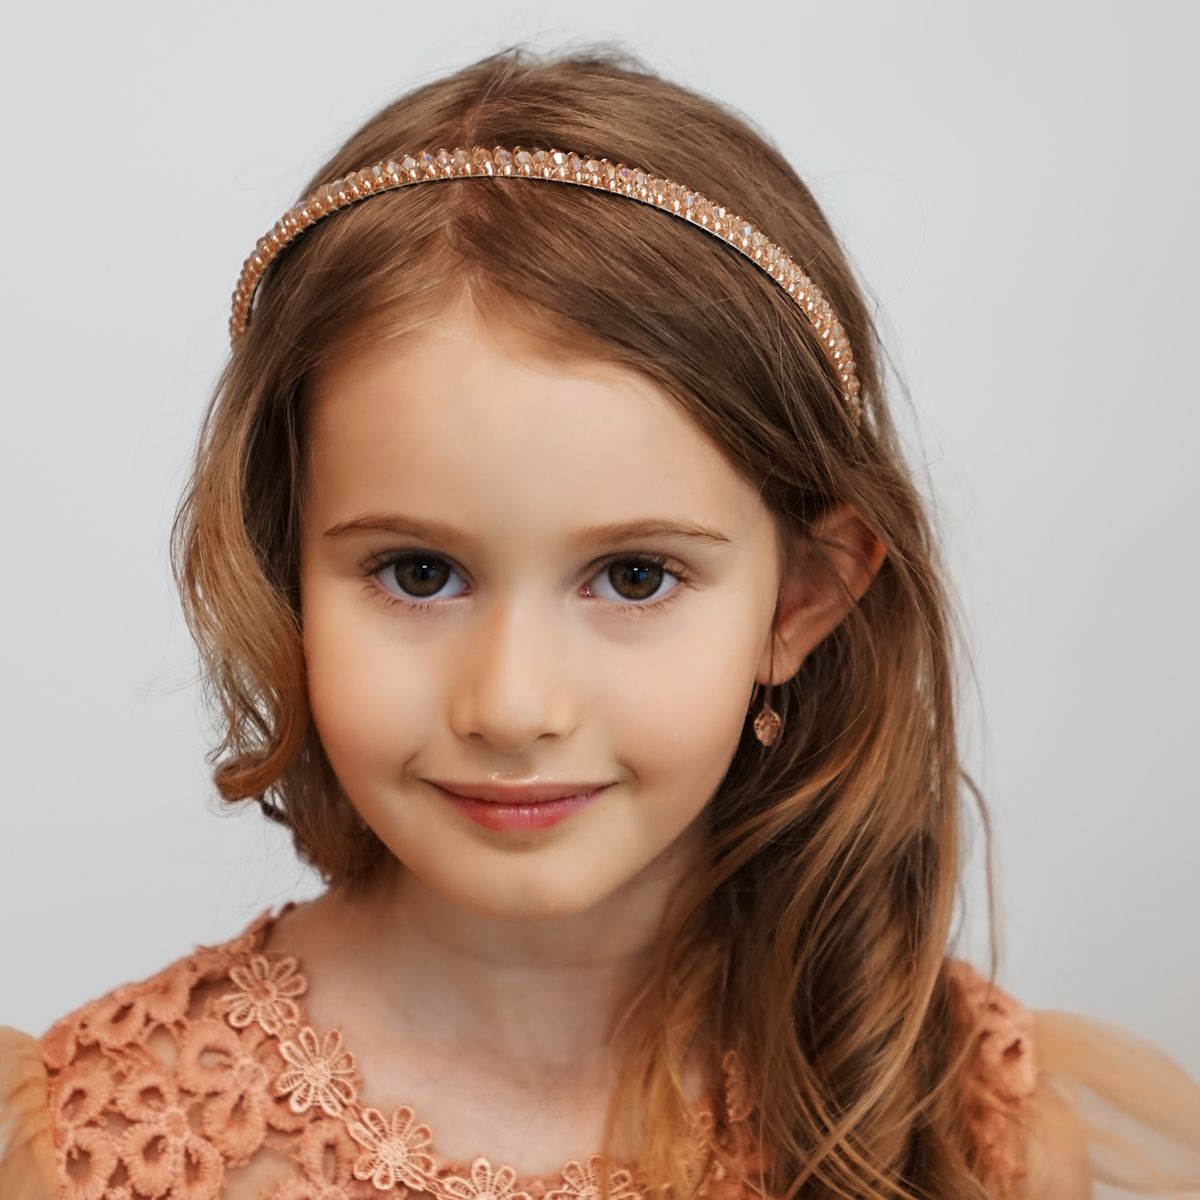 Hair Accessories Little Girls, Girls Hair Band Beads